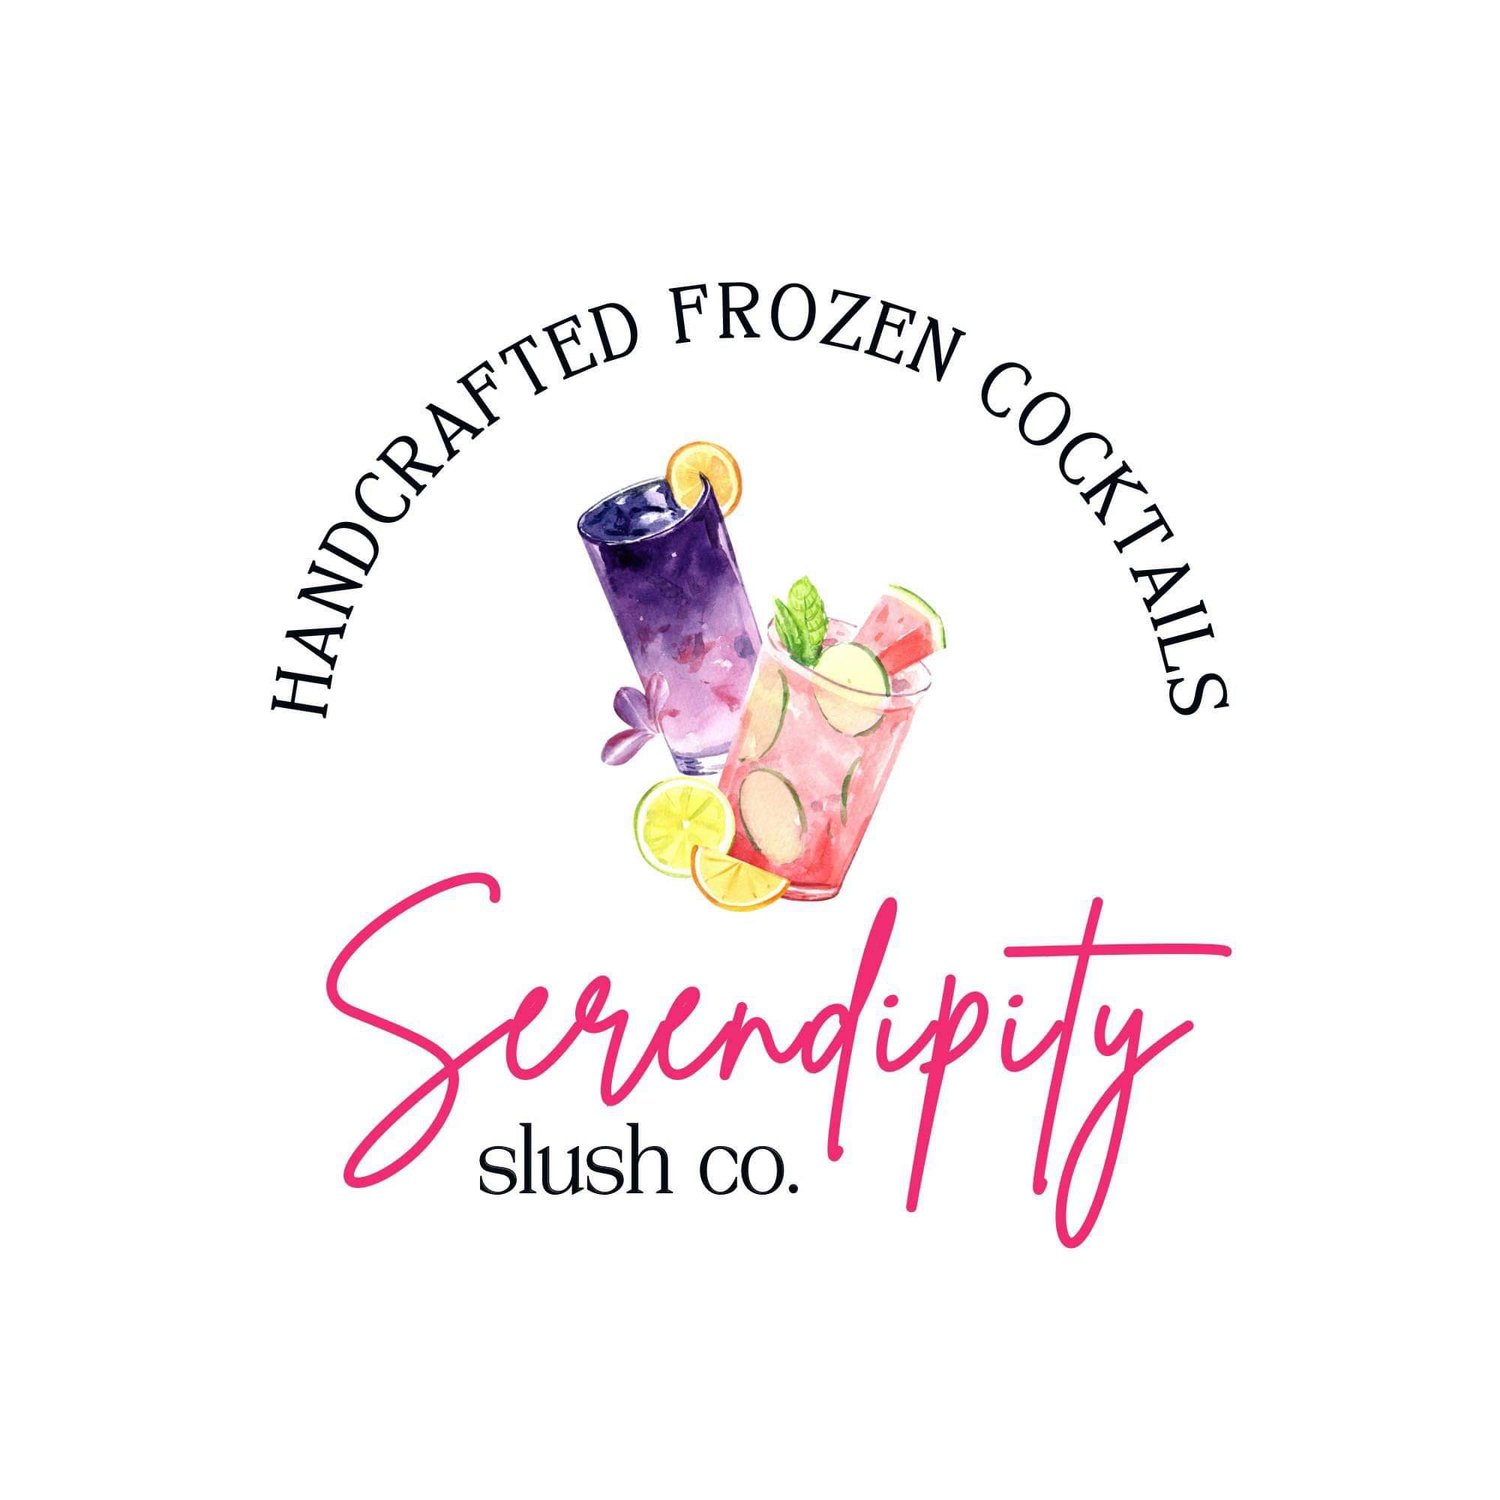 Serendipity Slush Co., LLC